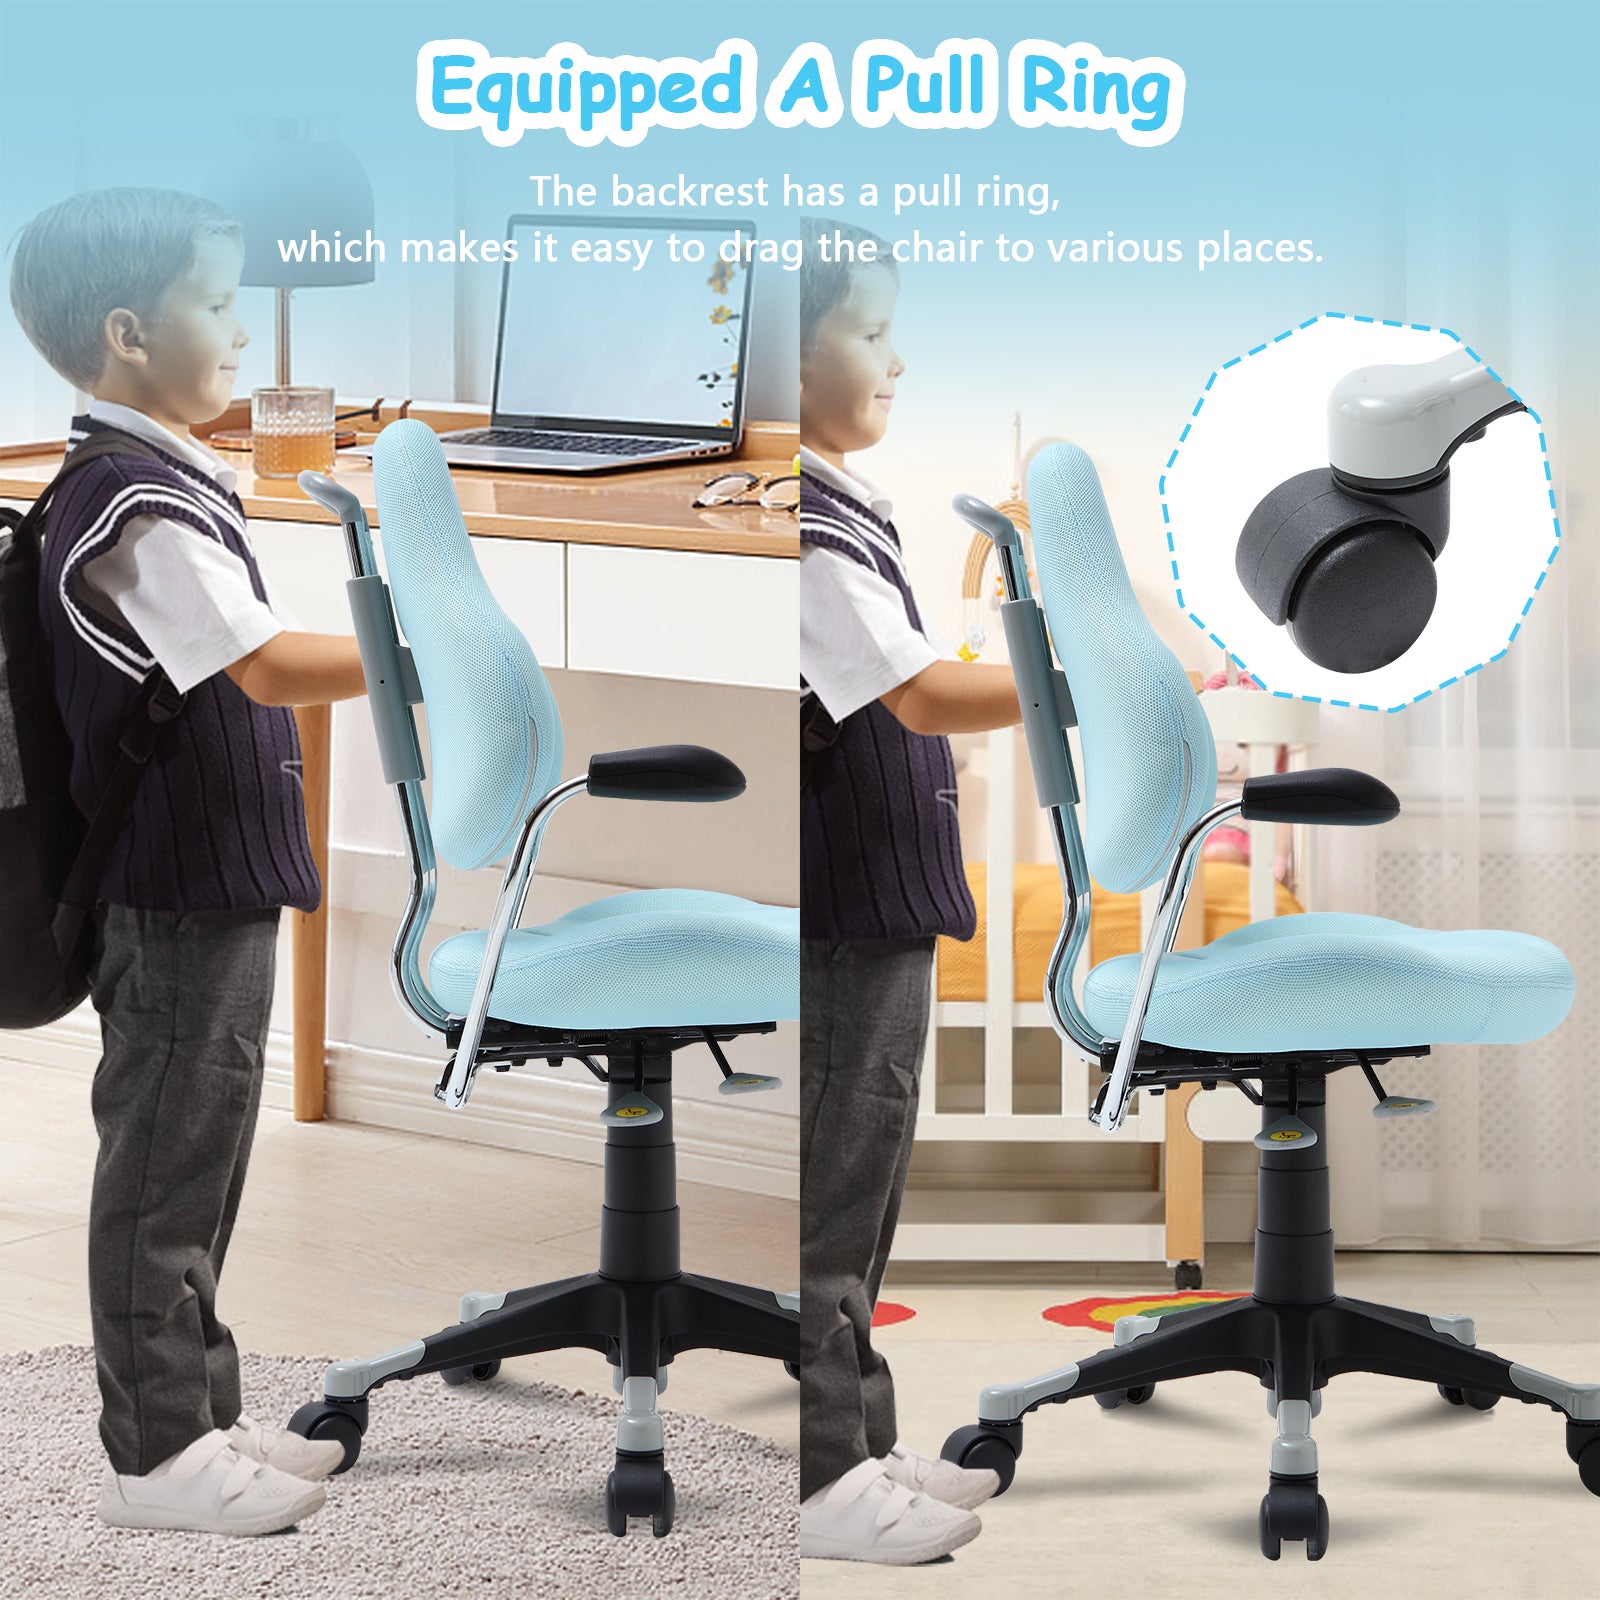 Ergonomic Children Kids Study Desk Chair Swivel Chair with Adjustable Height Mesh Mid-Back, Blue